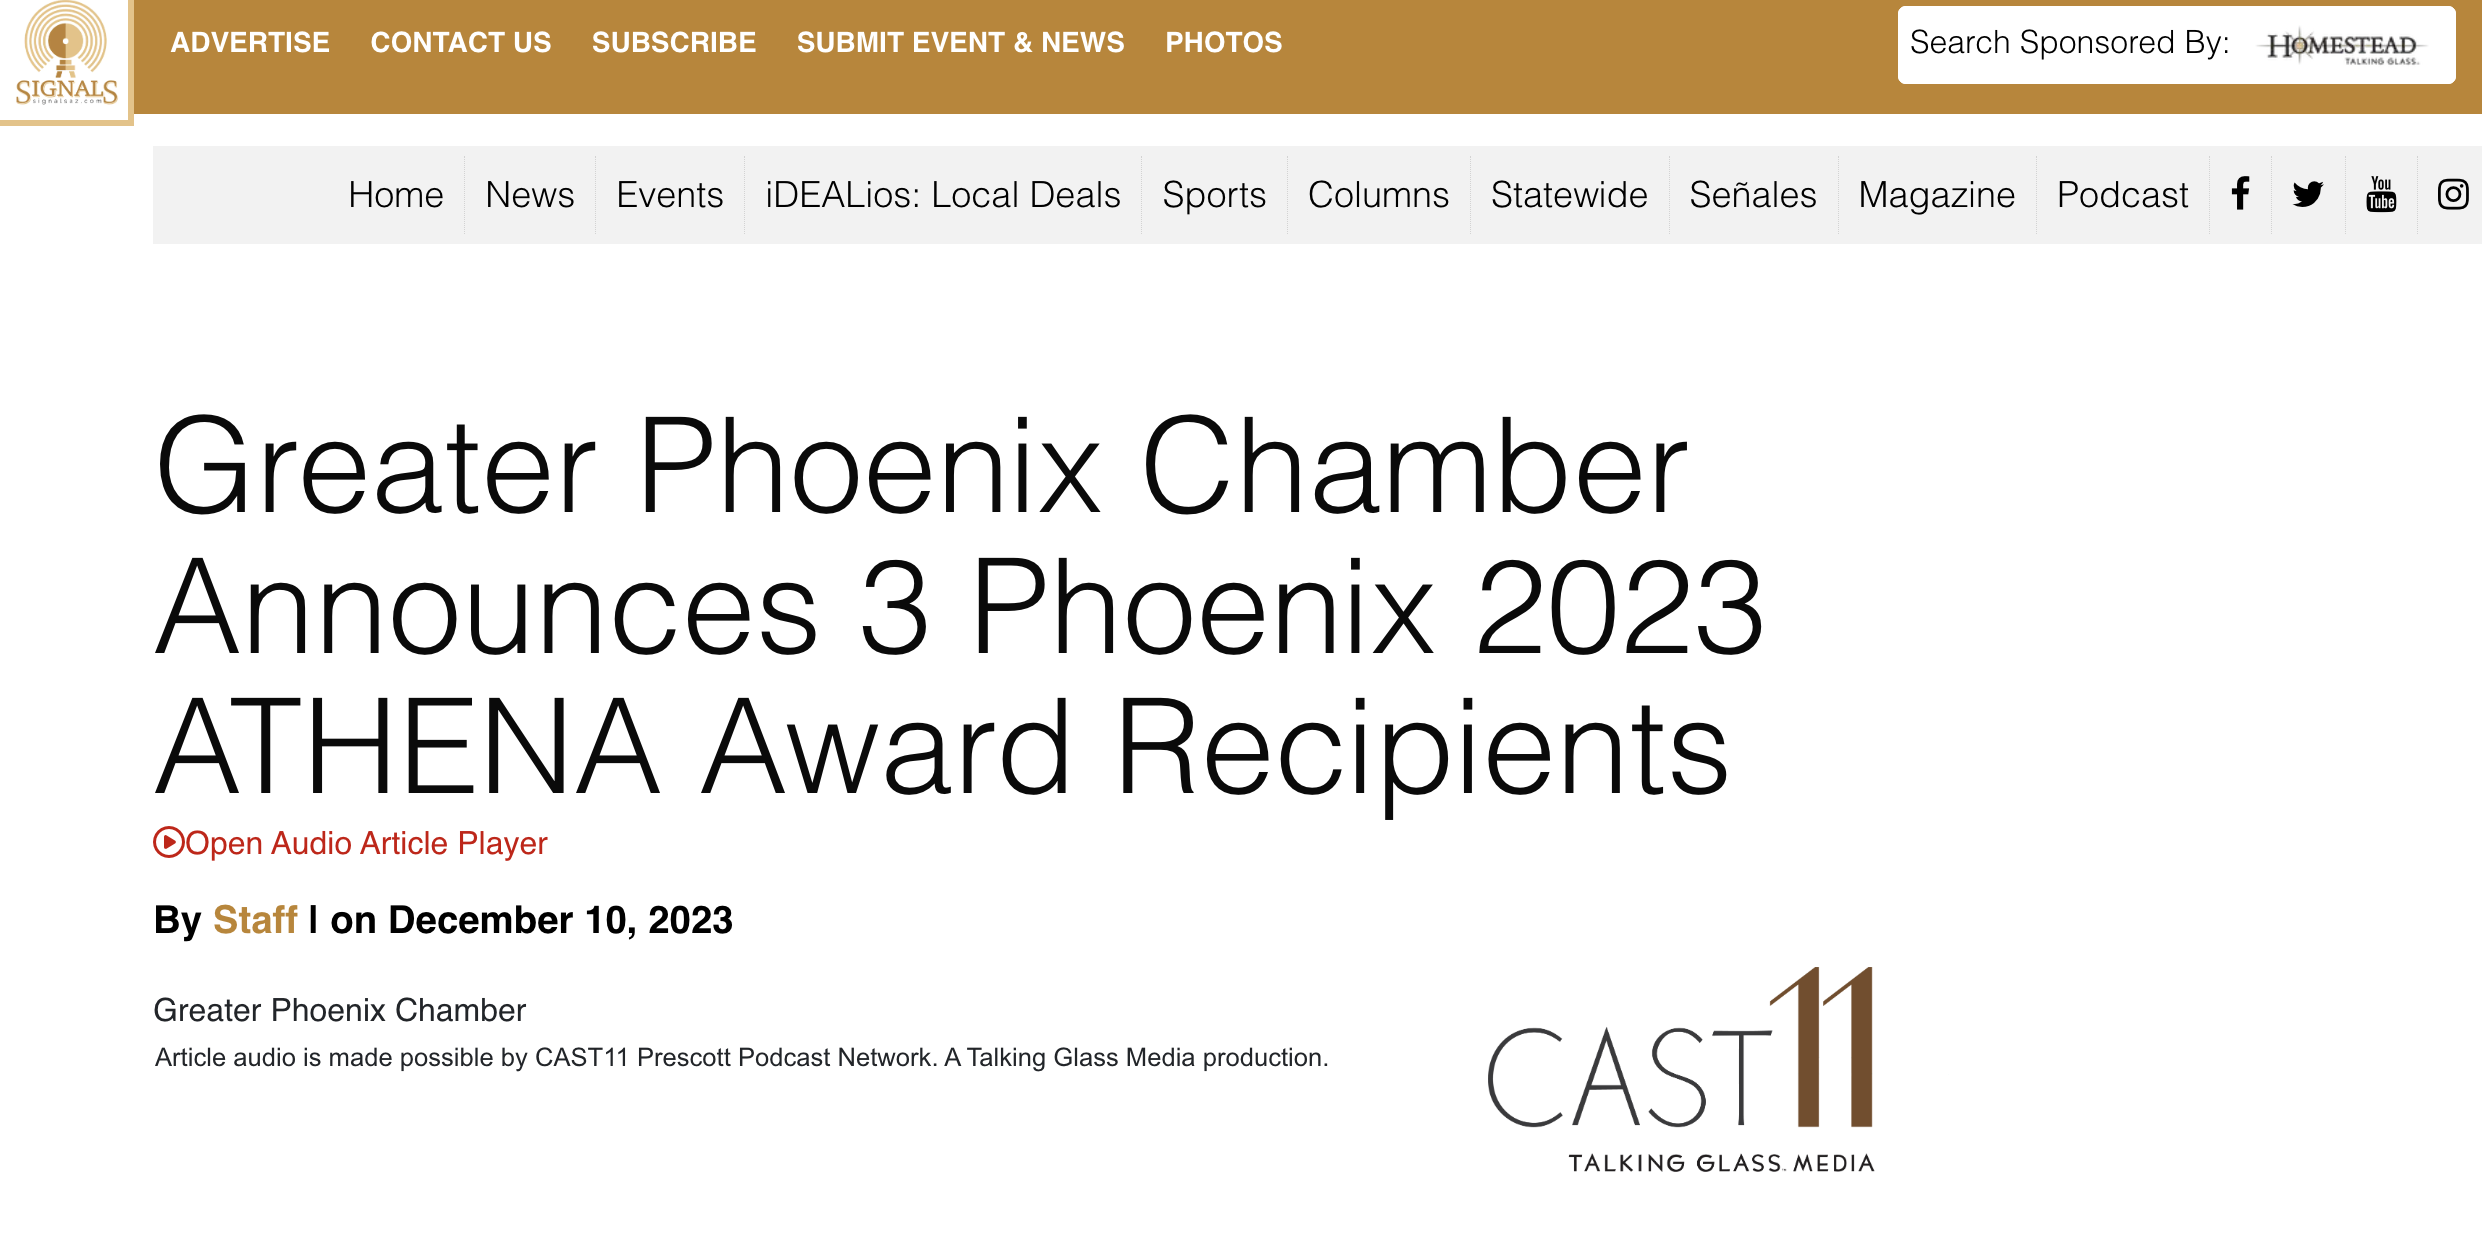 Greater Phoenix Chamber Announces 3 Phoenix 2023 ATHENA Award Recipients (Copy)